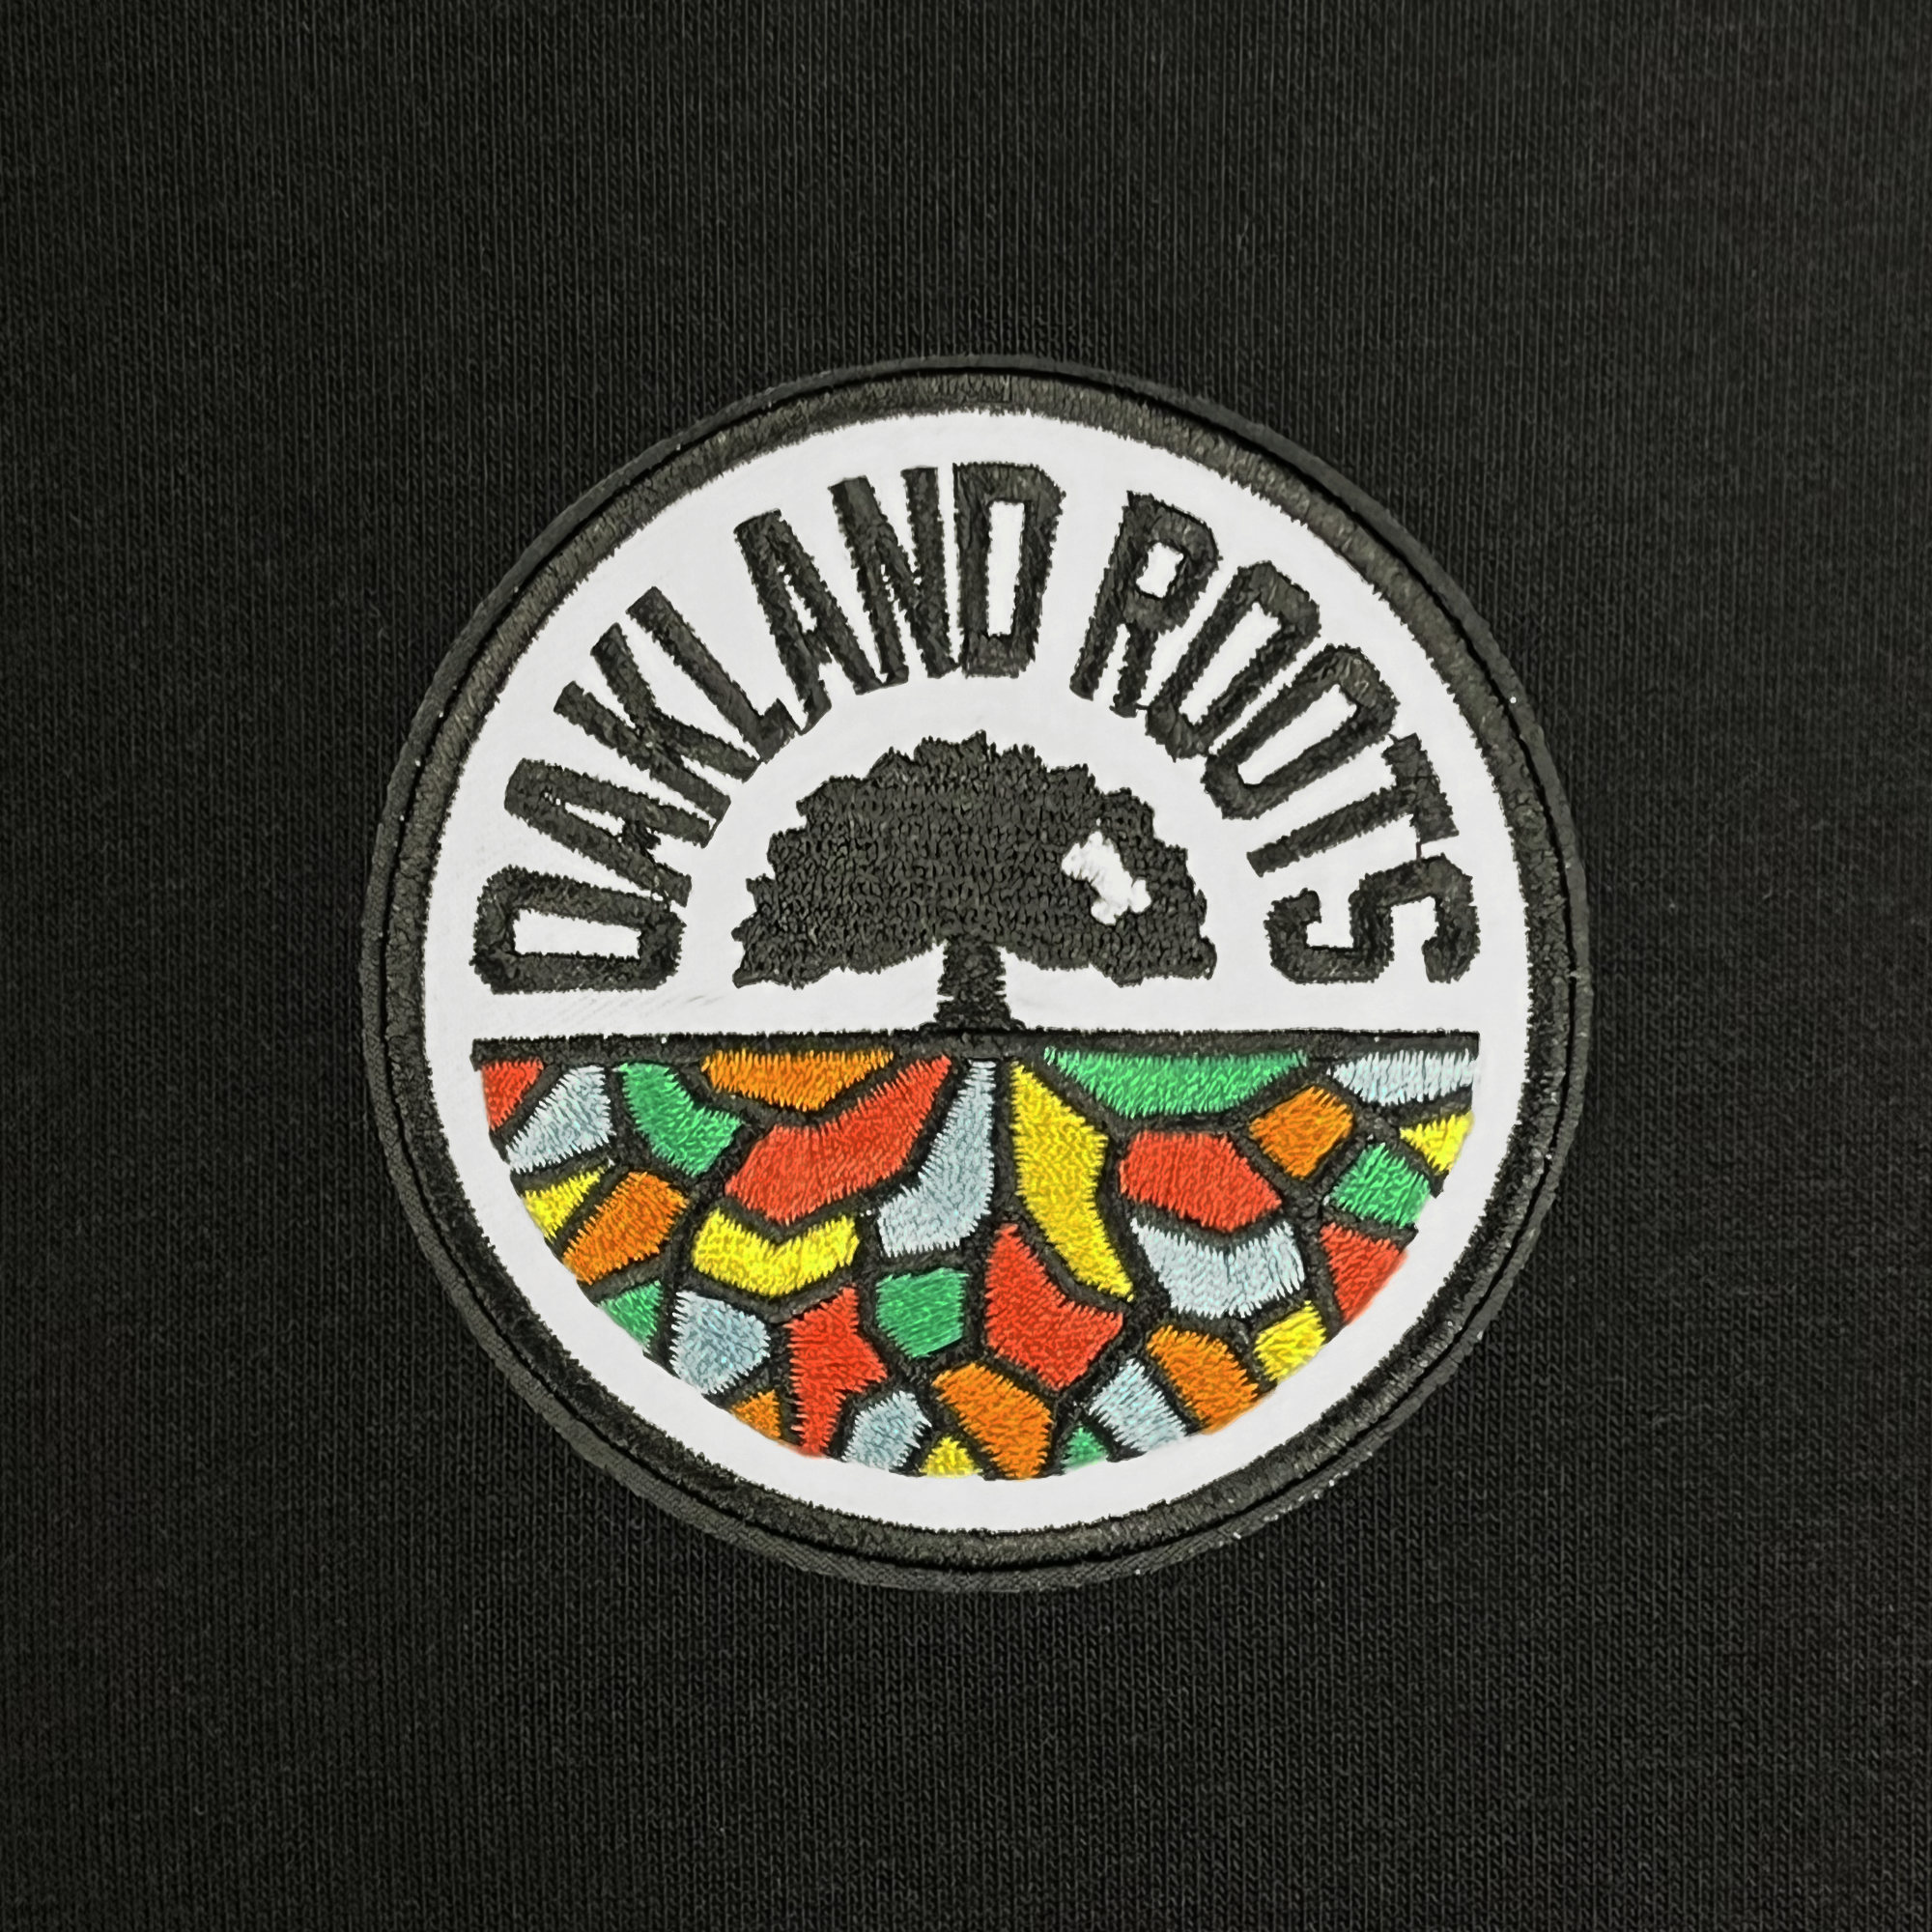 Oakland Roots SC Logo Premium Hoodie